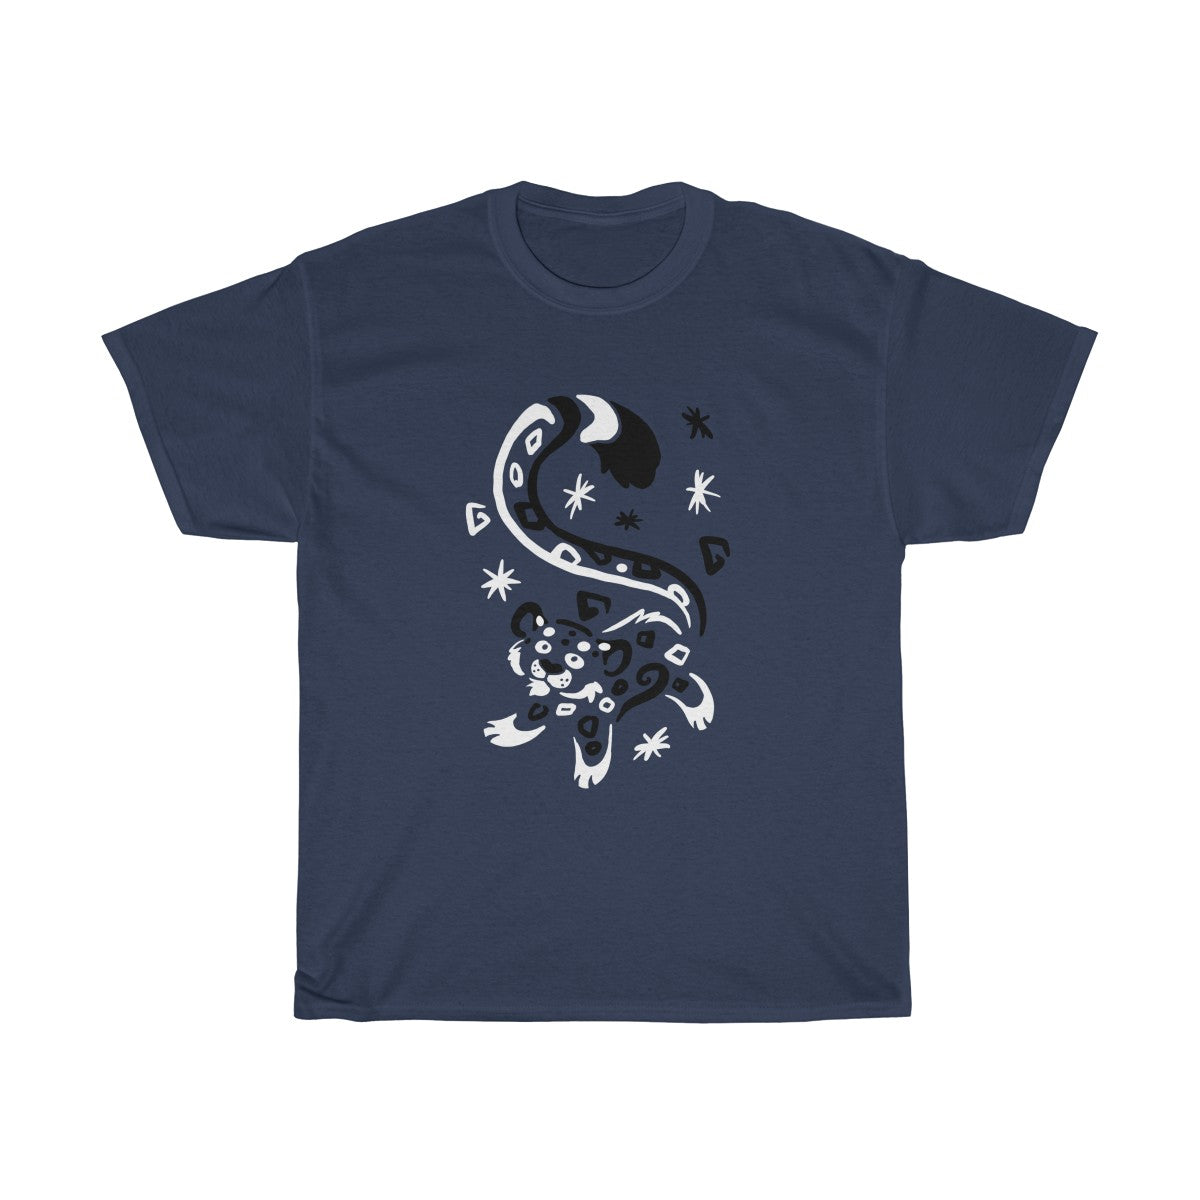 Sneps & Snow - T-Shirt T-Shirt Dire Creatures Navy Blue S 